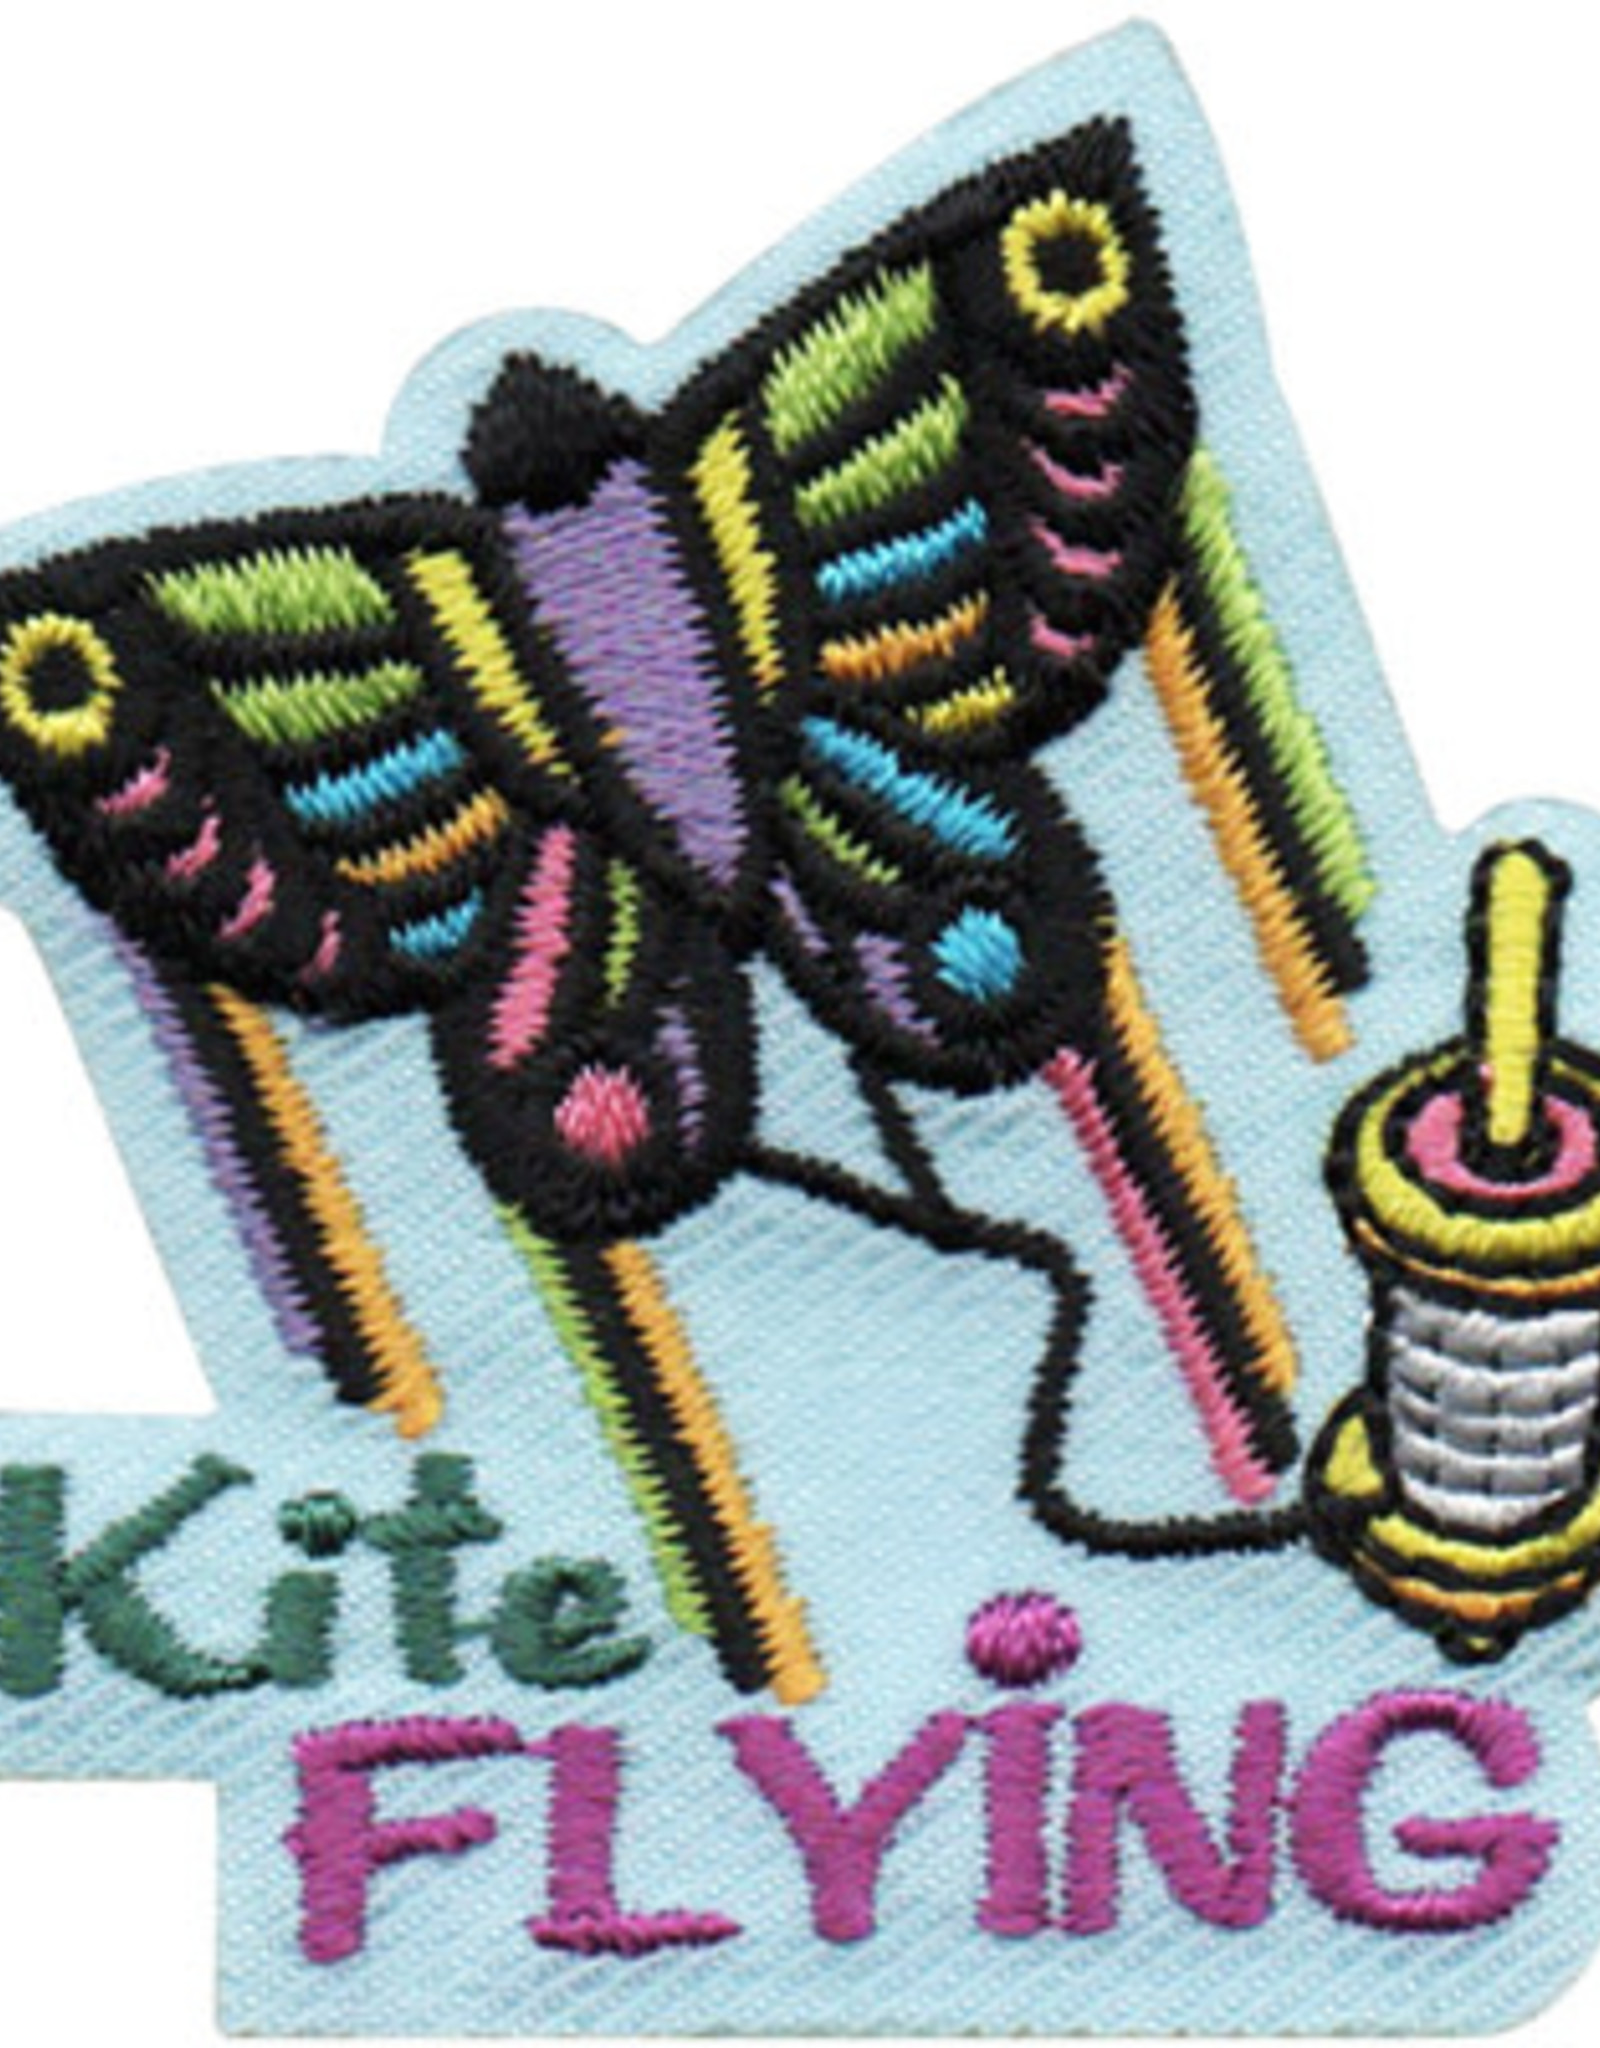 Kite Flying Fun Patch